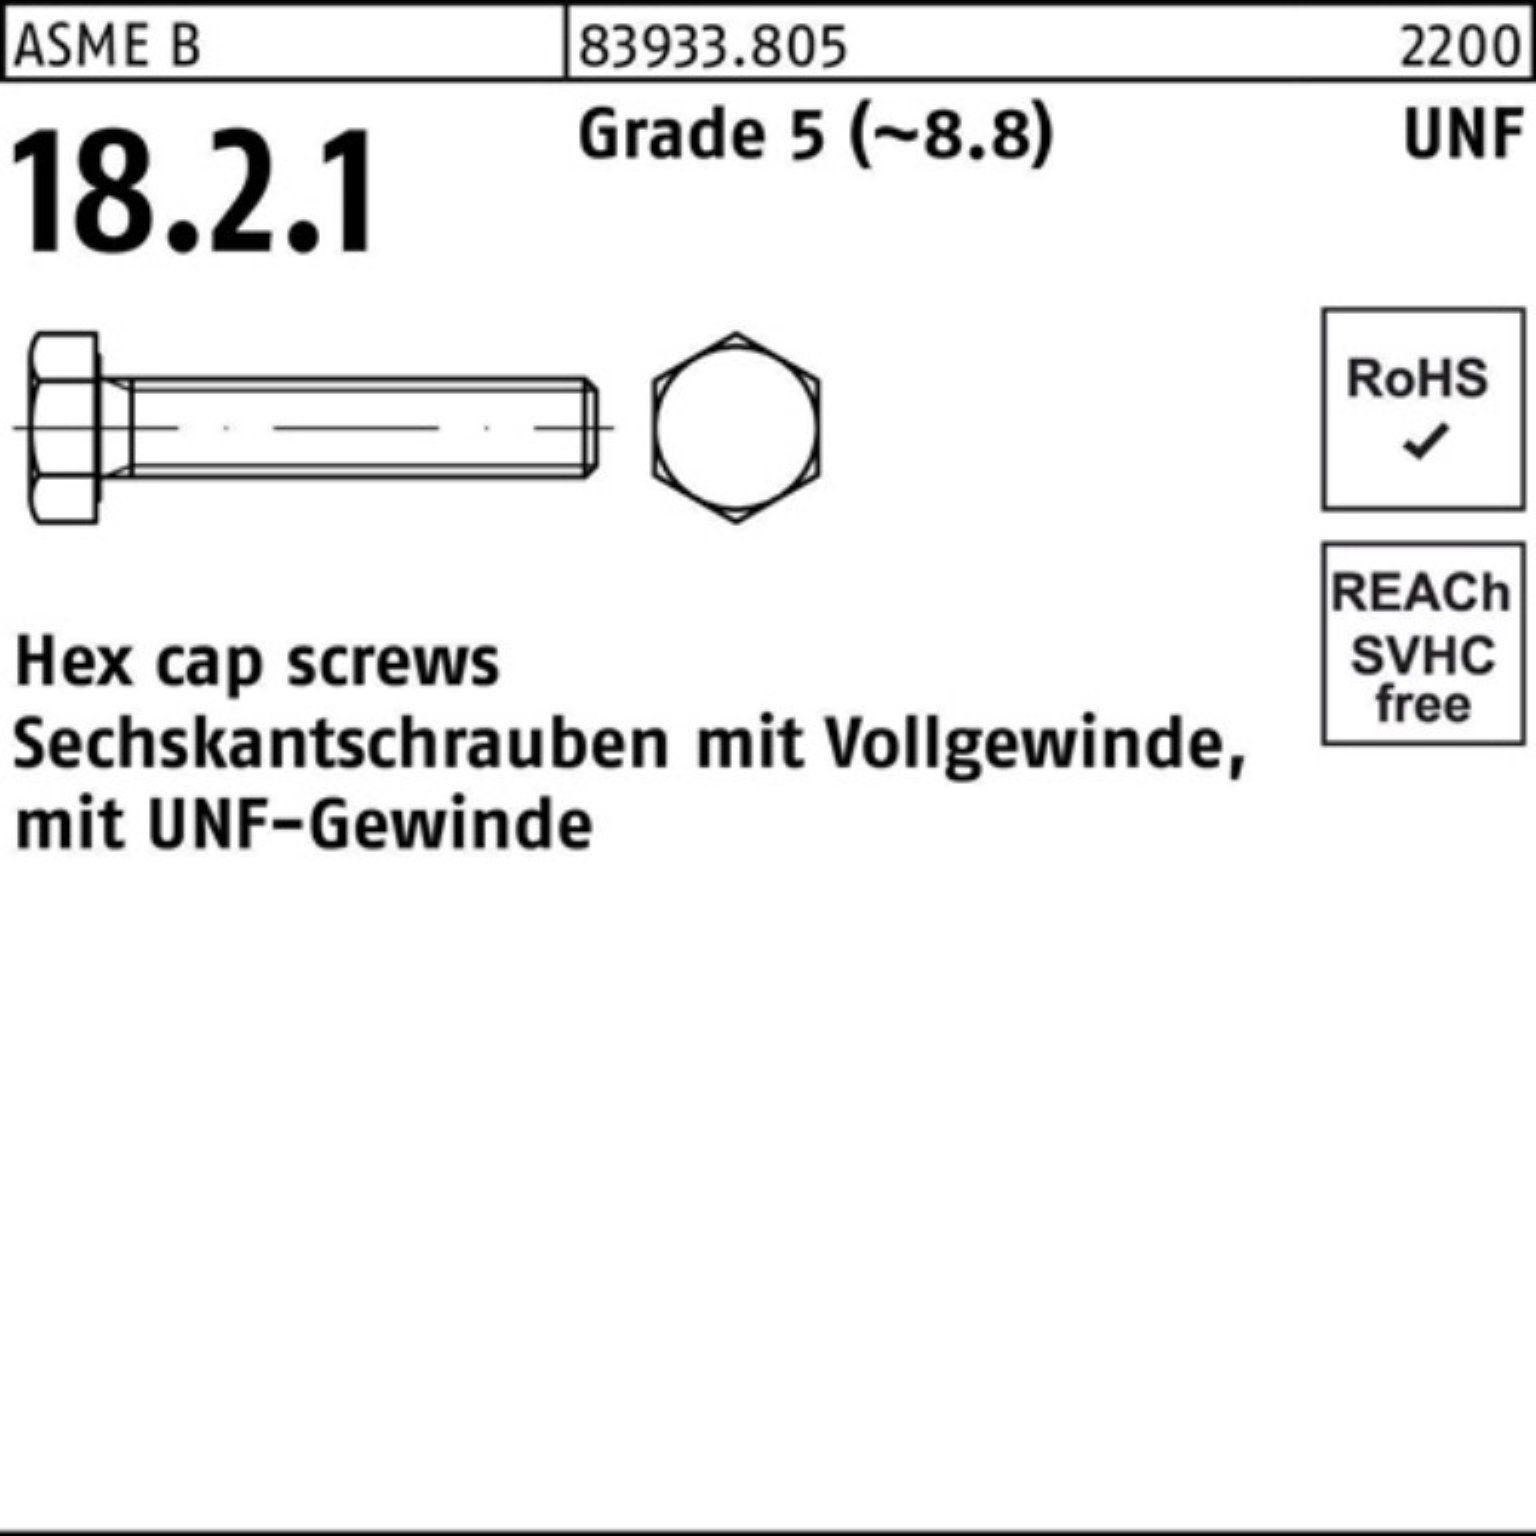 Reyher Sechskantschraube 100er Pack Sechskantschraube R 83933 UNF-Gewinde VG 3/8x 1 Grade 5 (8